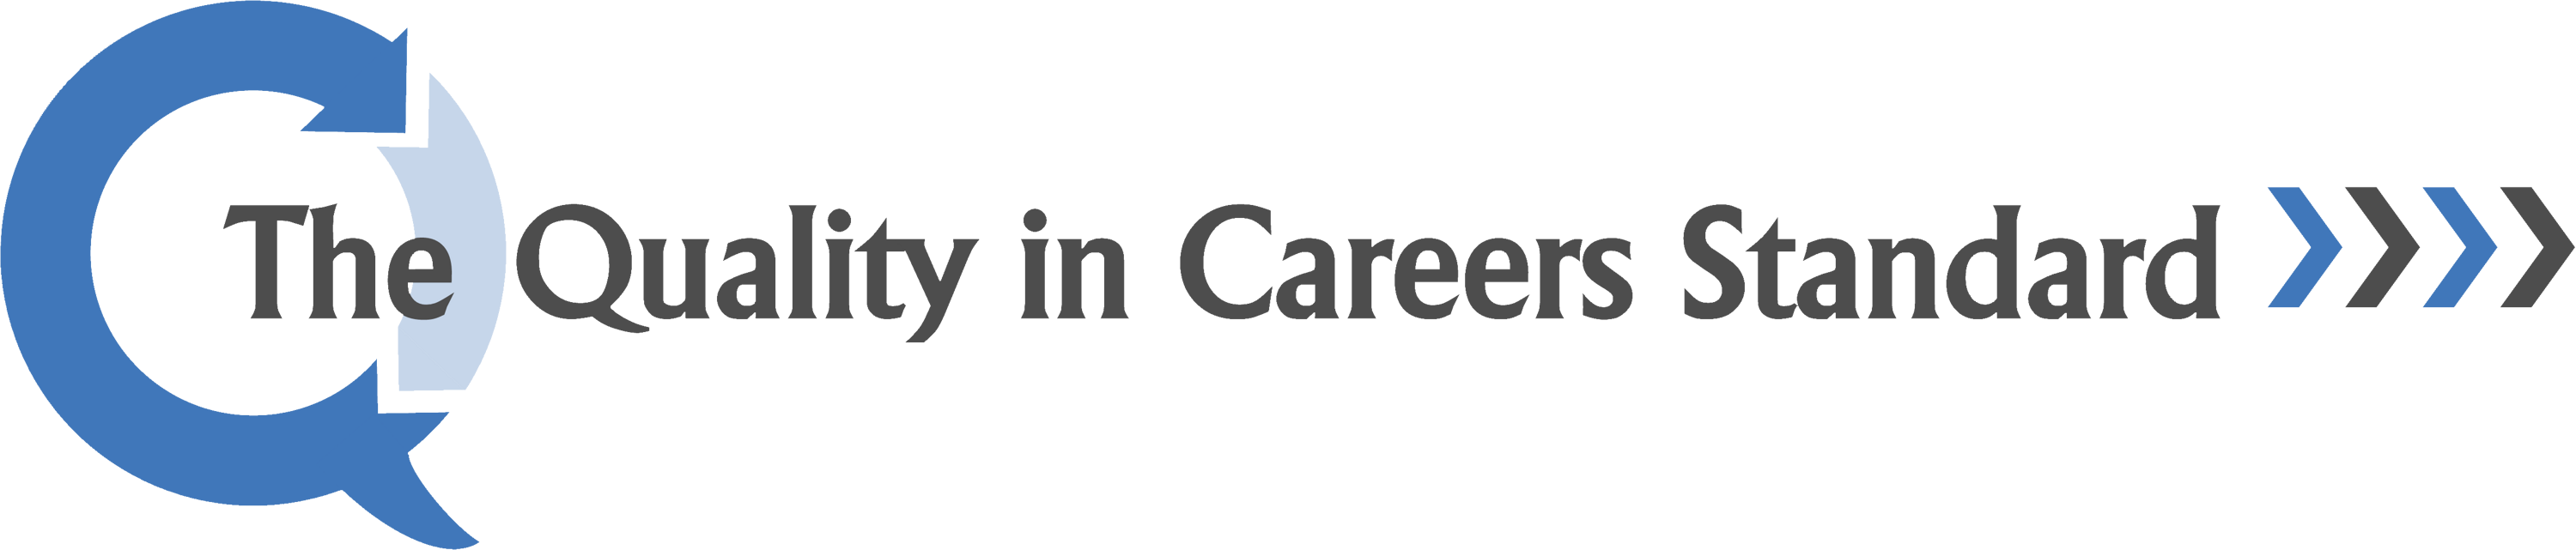 Careers logo